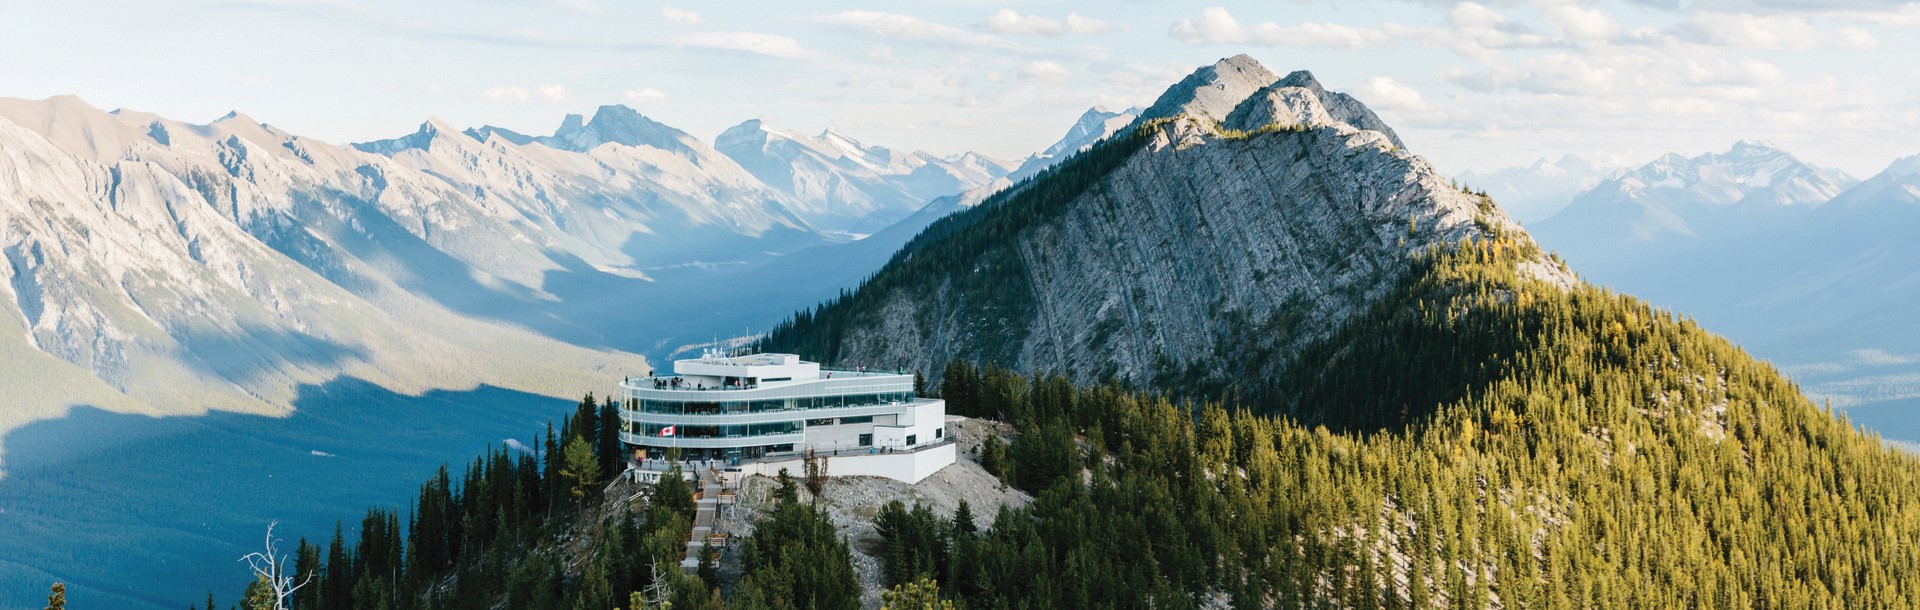 Explore Banff Sightseeing Tour